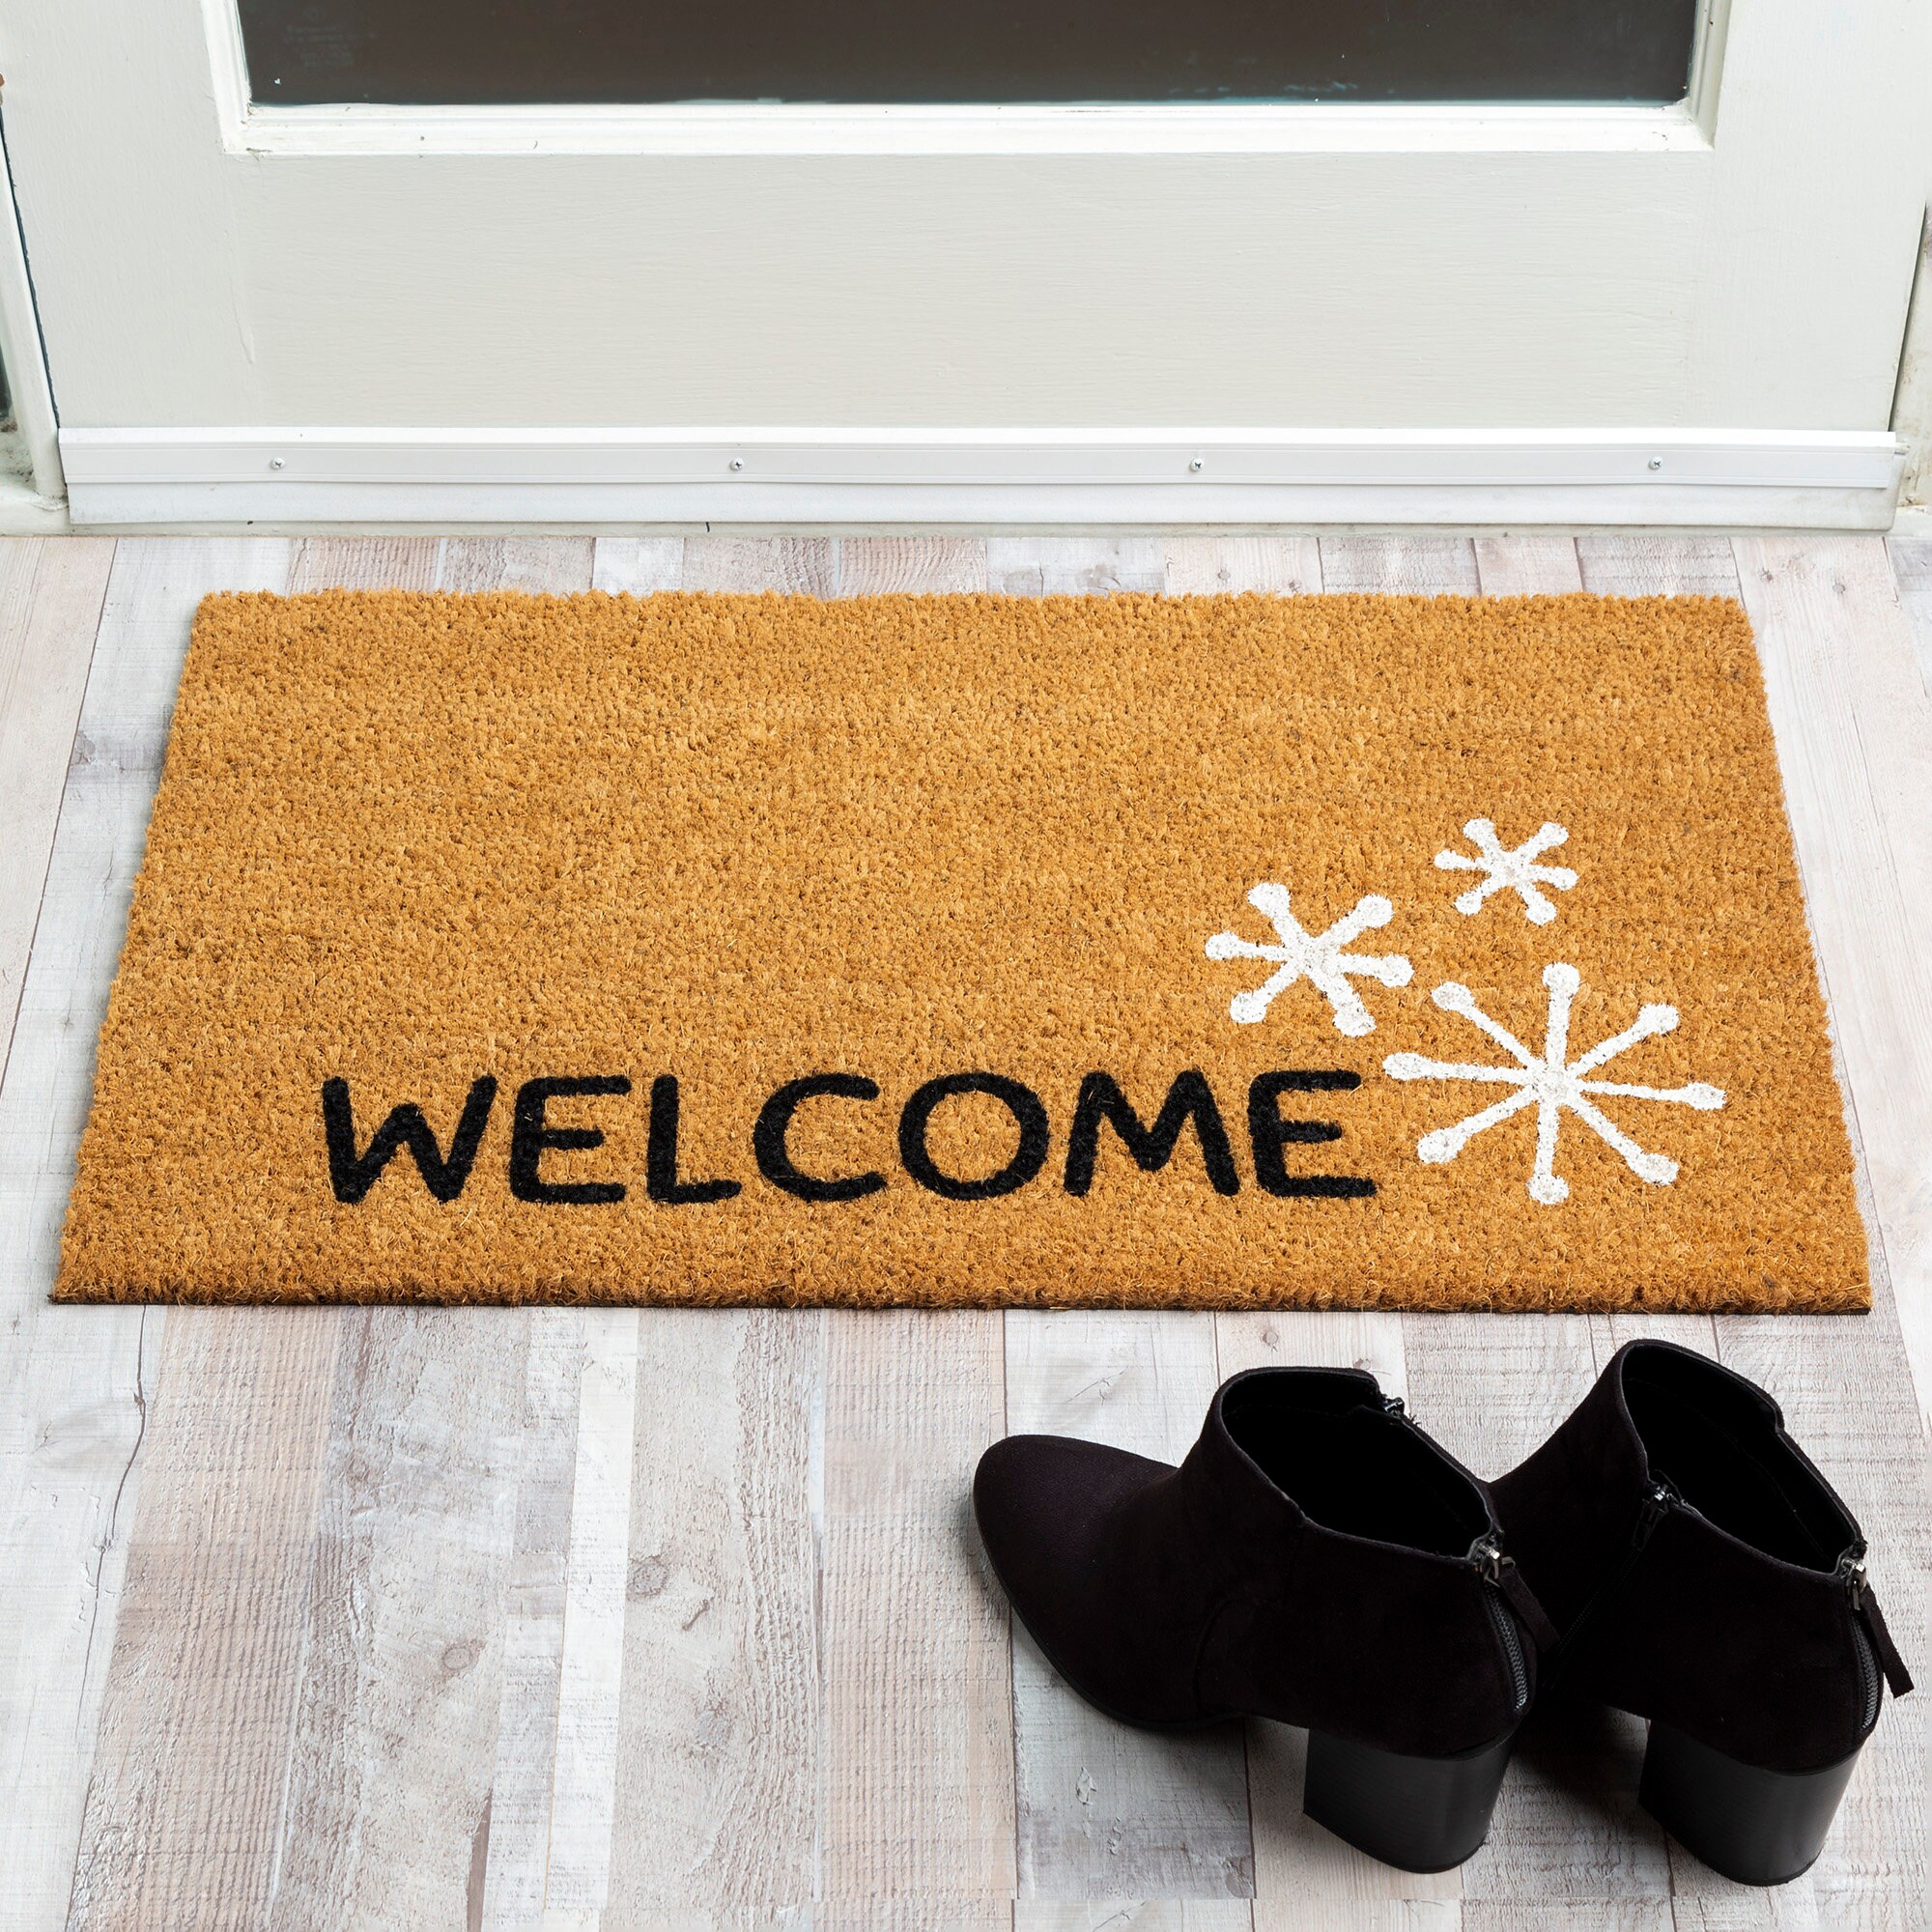 Neighburly Holiday Snowflake Doormat